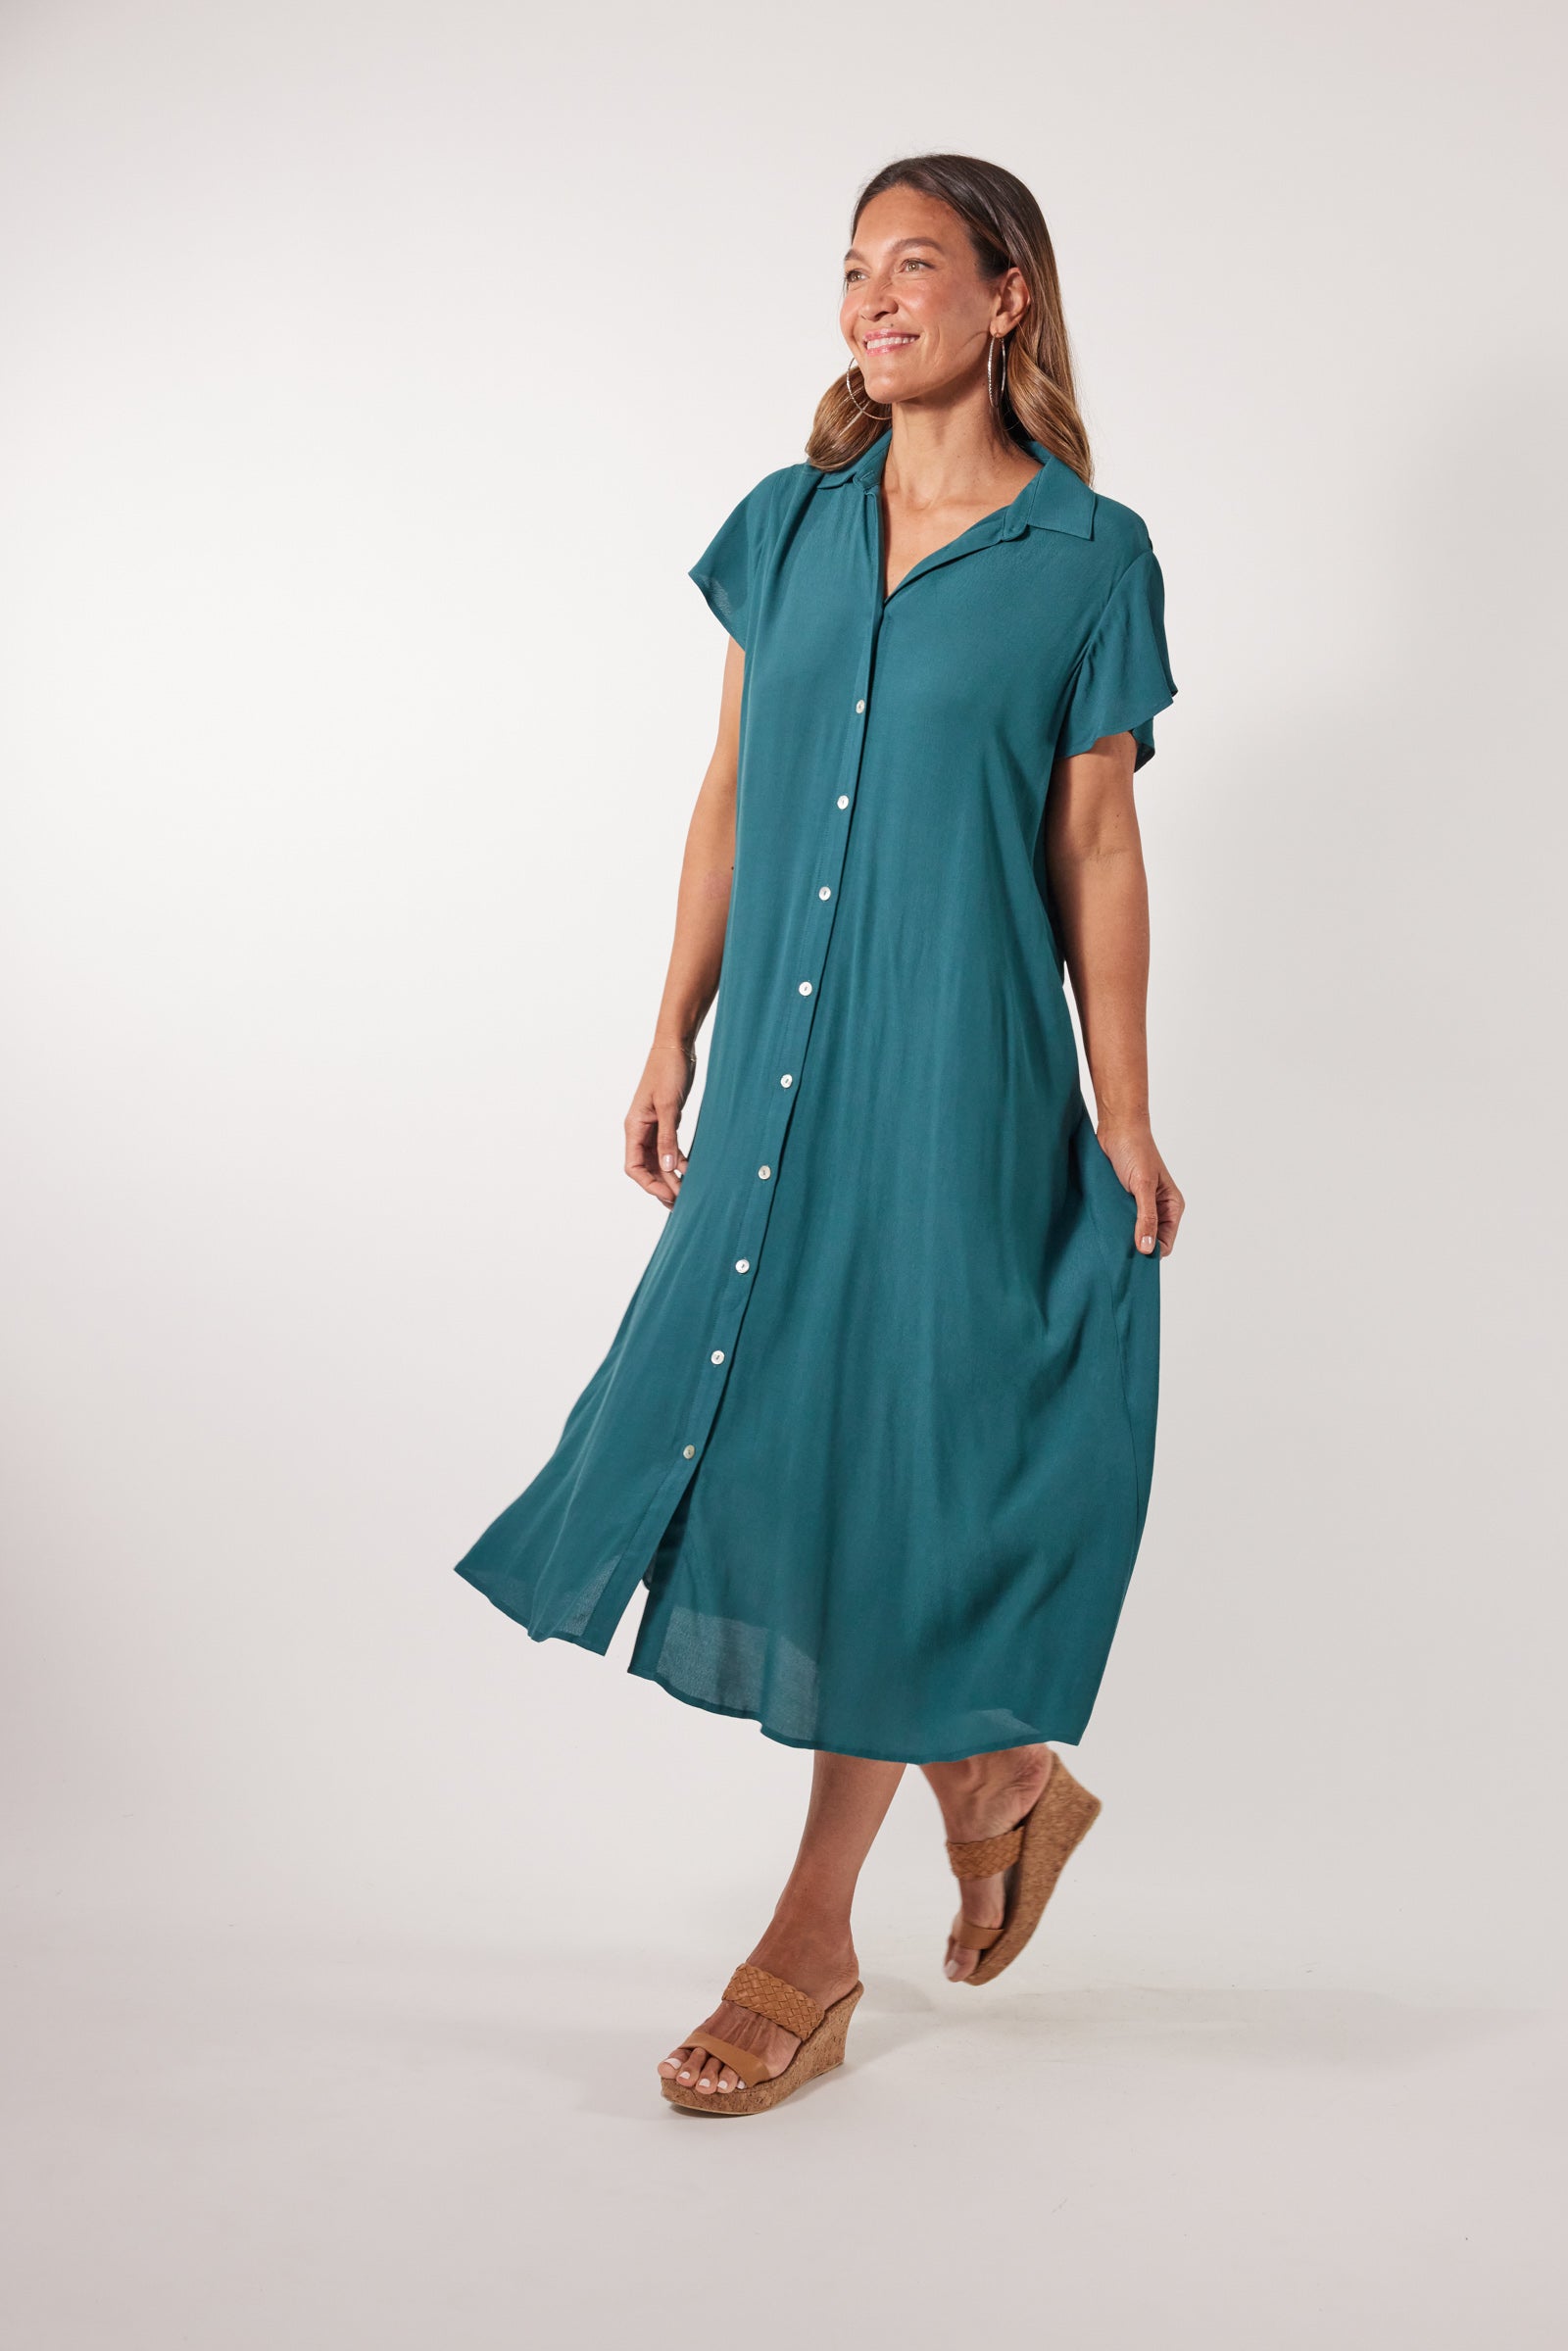 Botanical Shirt Dress - Teal - Isle of Mine Clothing - Dress Mid